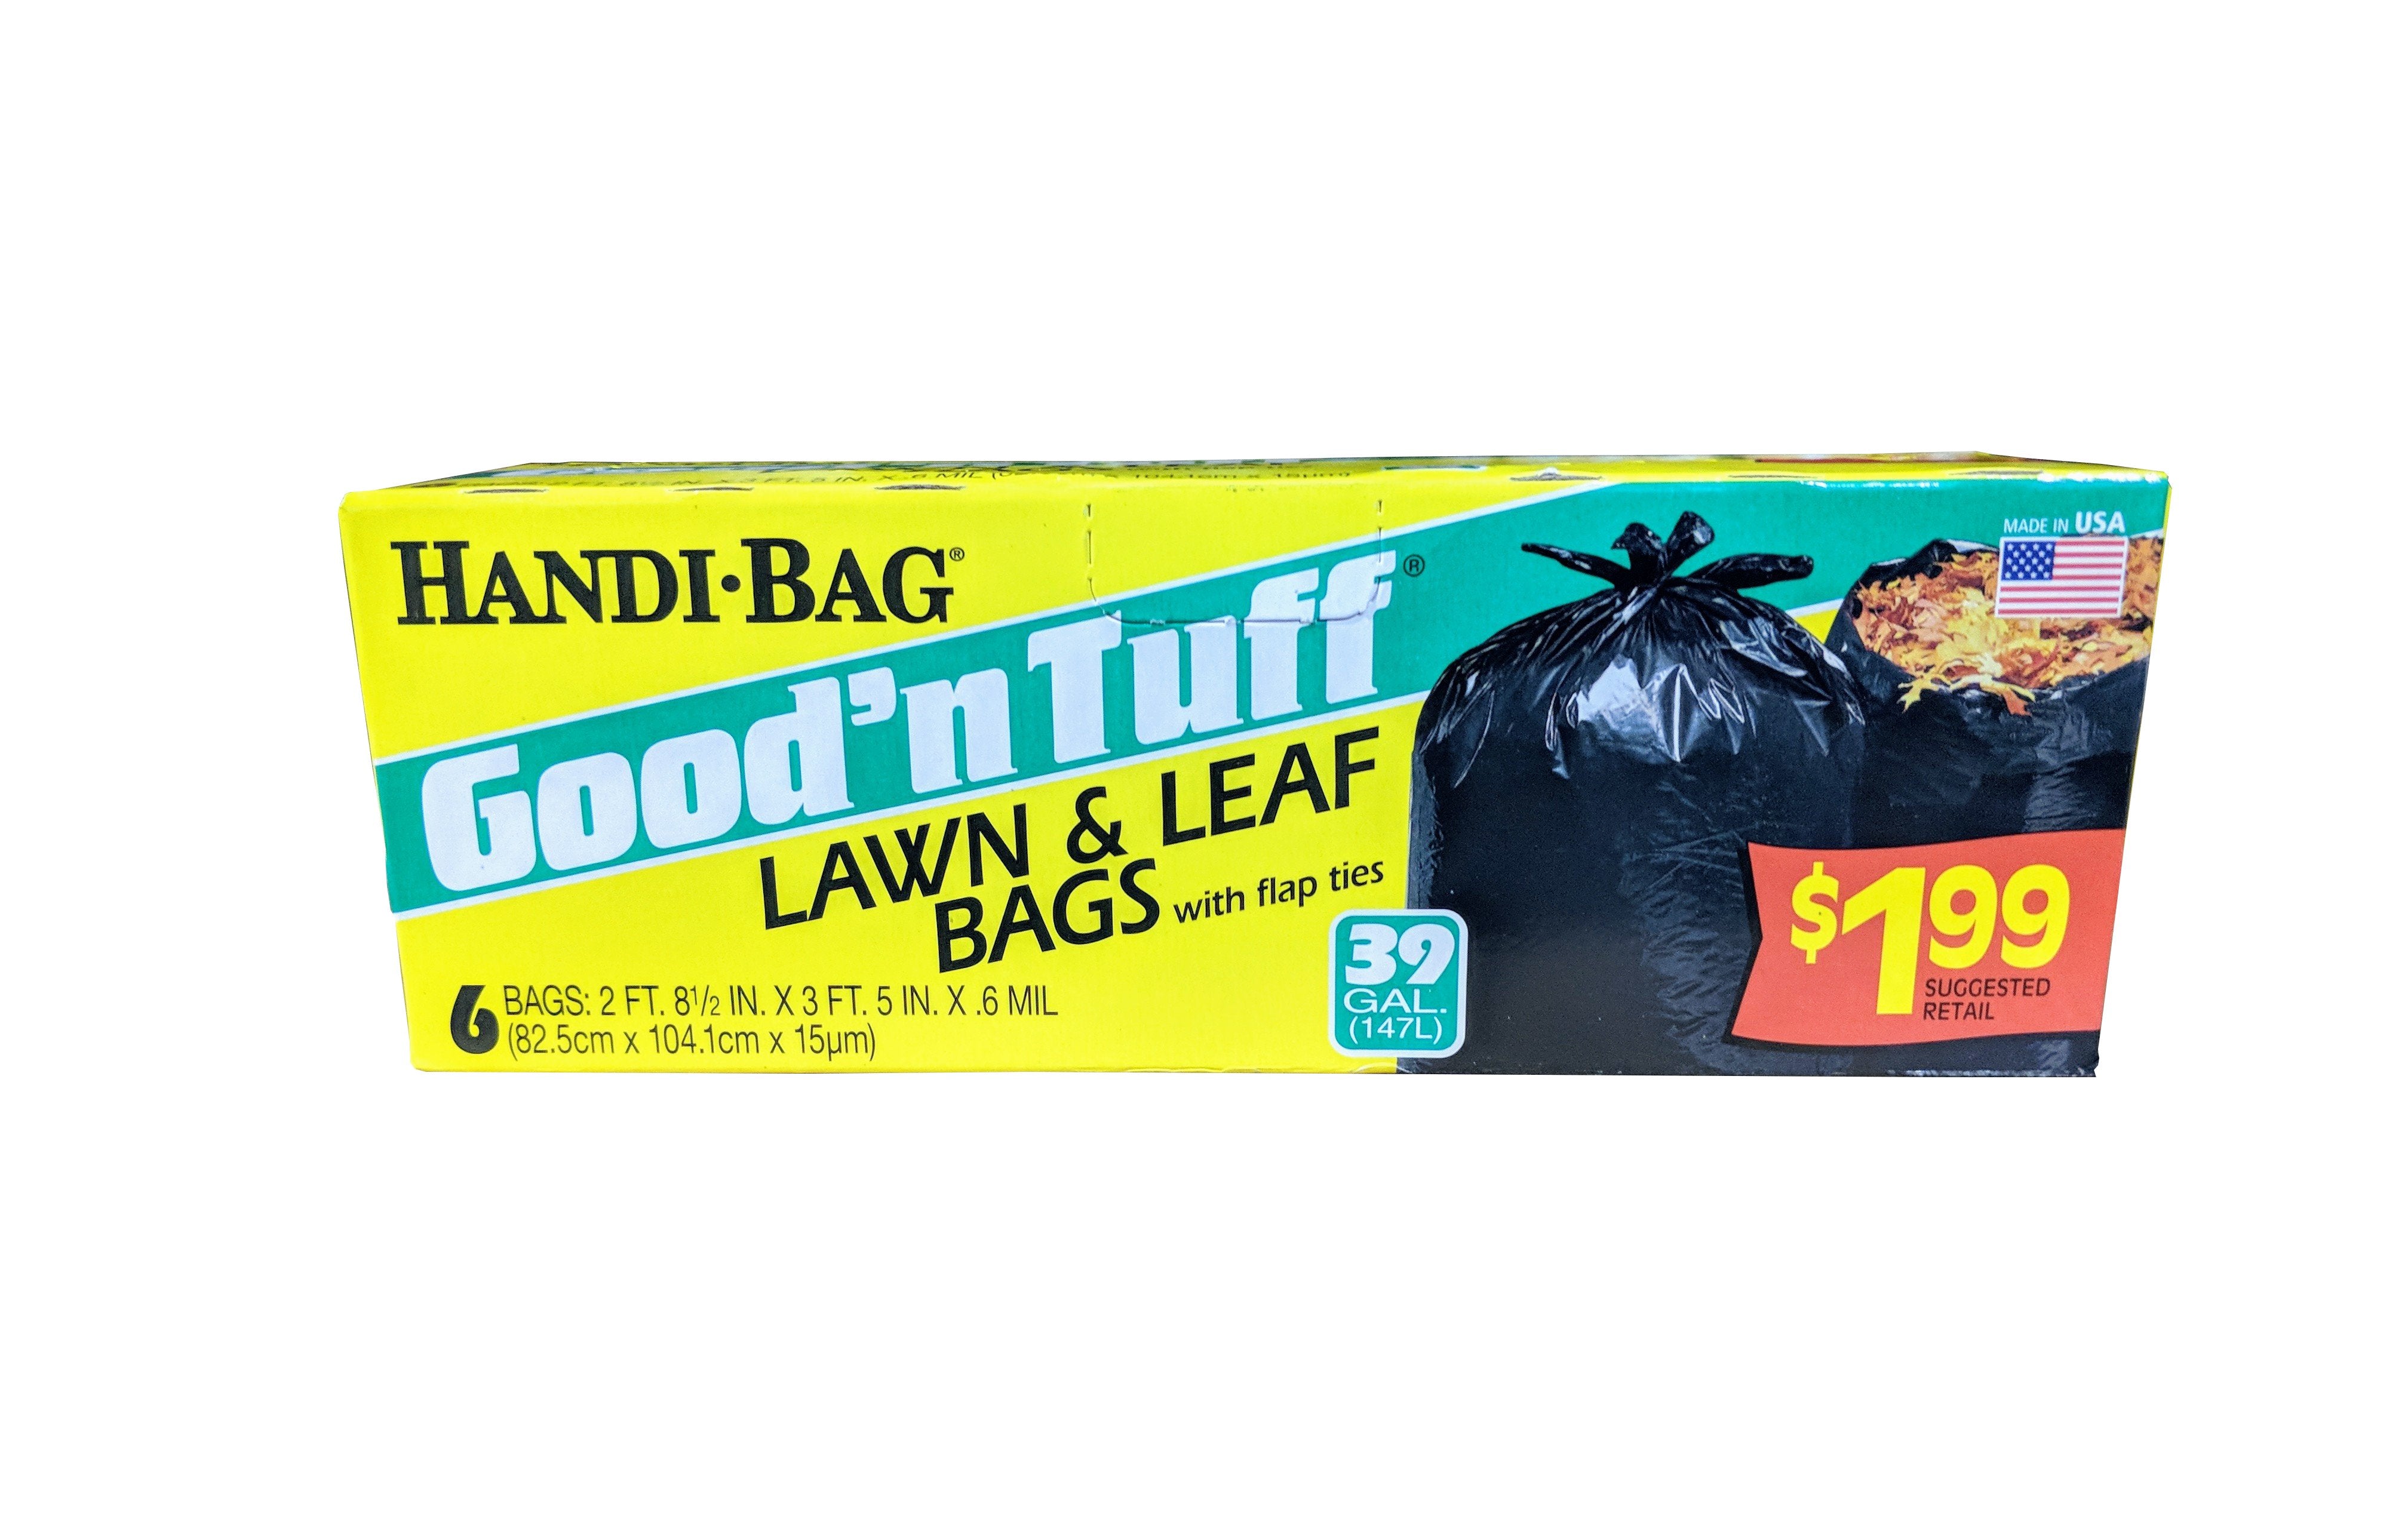 Good'n Tuff - Lawn & Leaf Trash Bags, 39 Gallon, Flap-Ties, 6 Pack - Case of 12